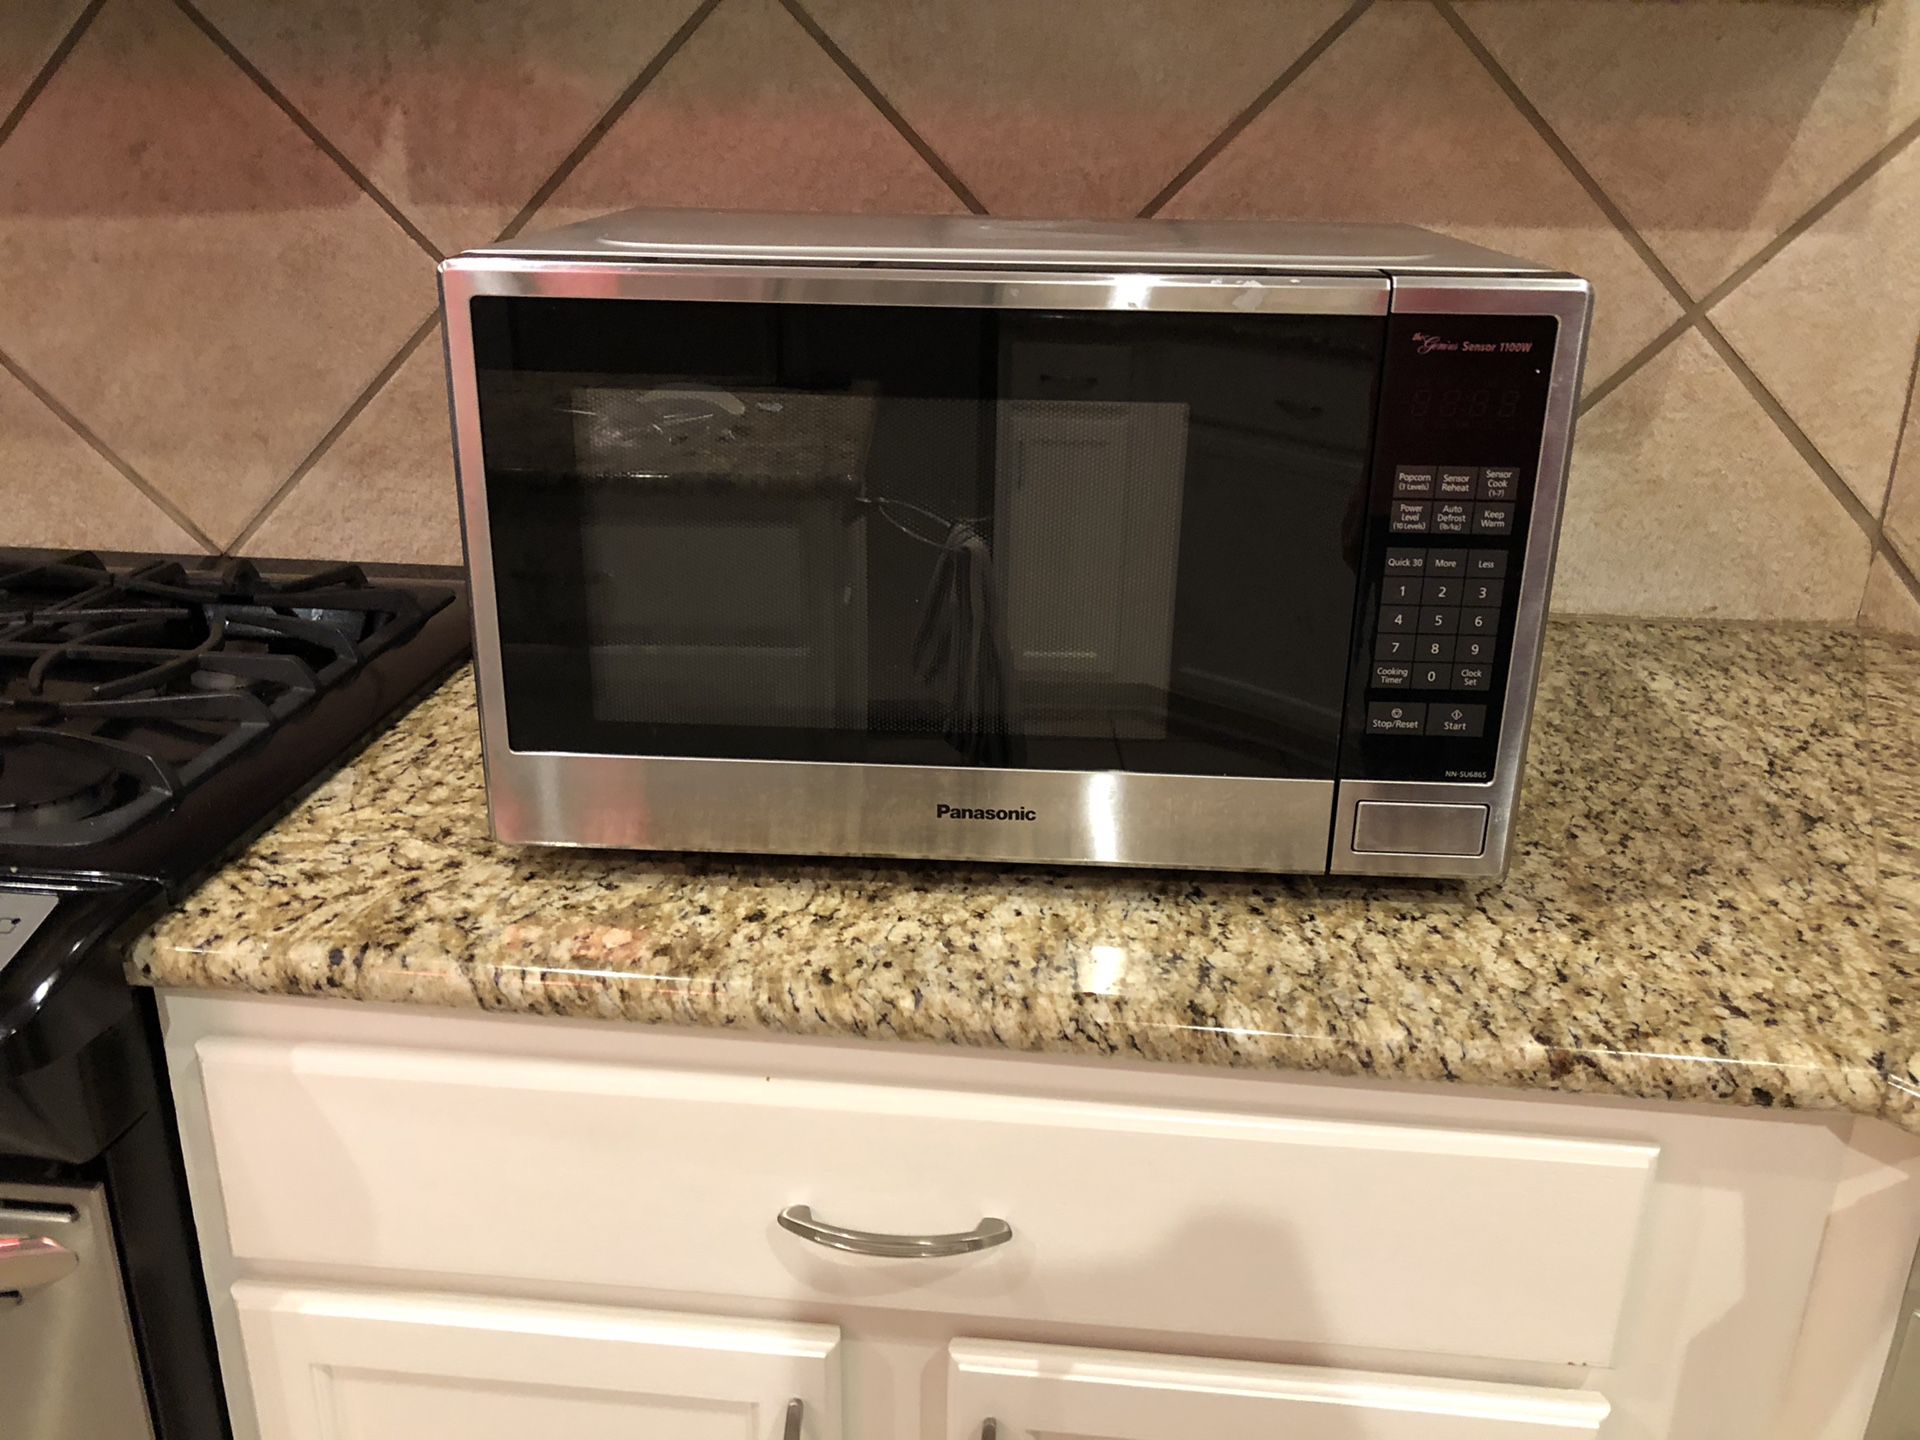 Panasonic microwave. Purchased for $150